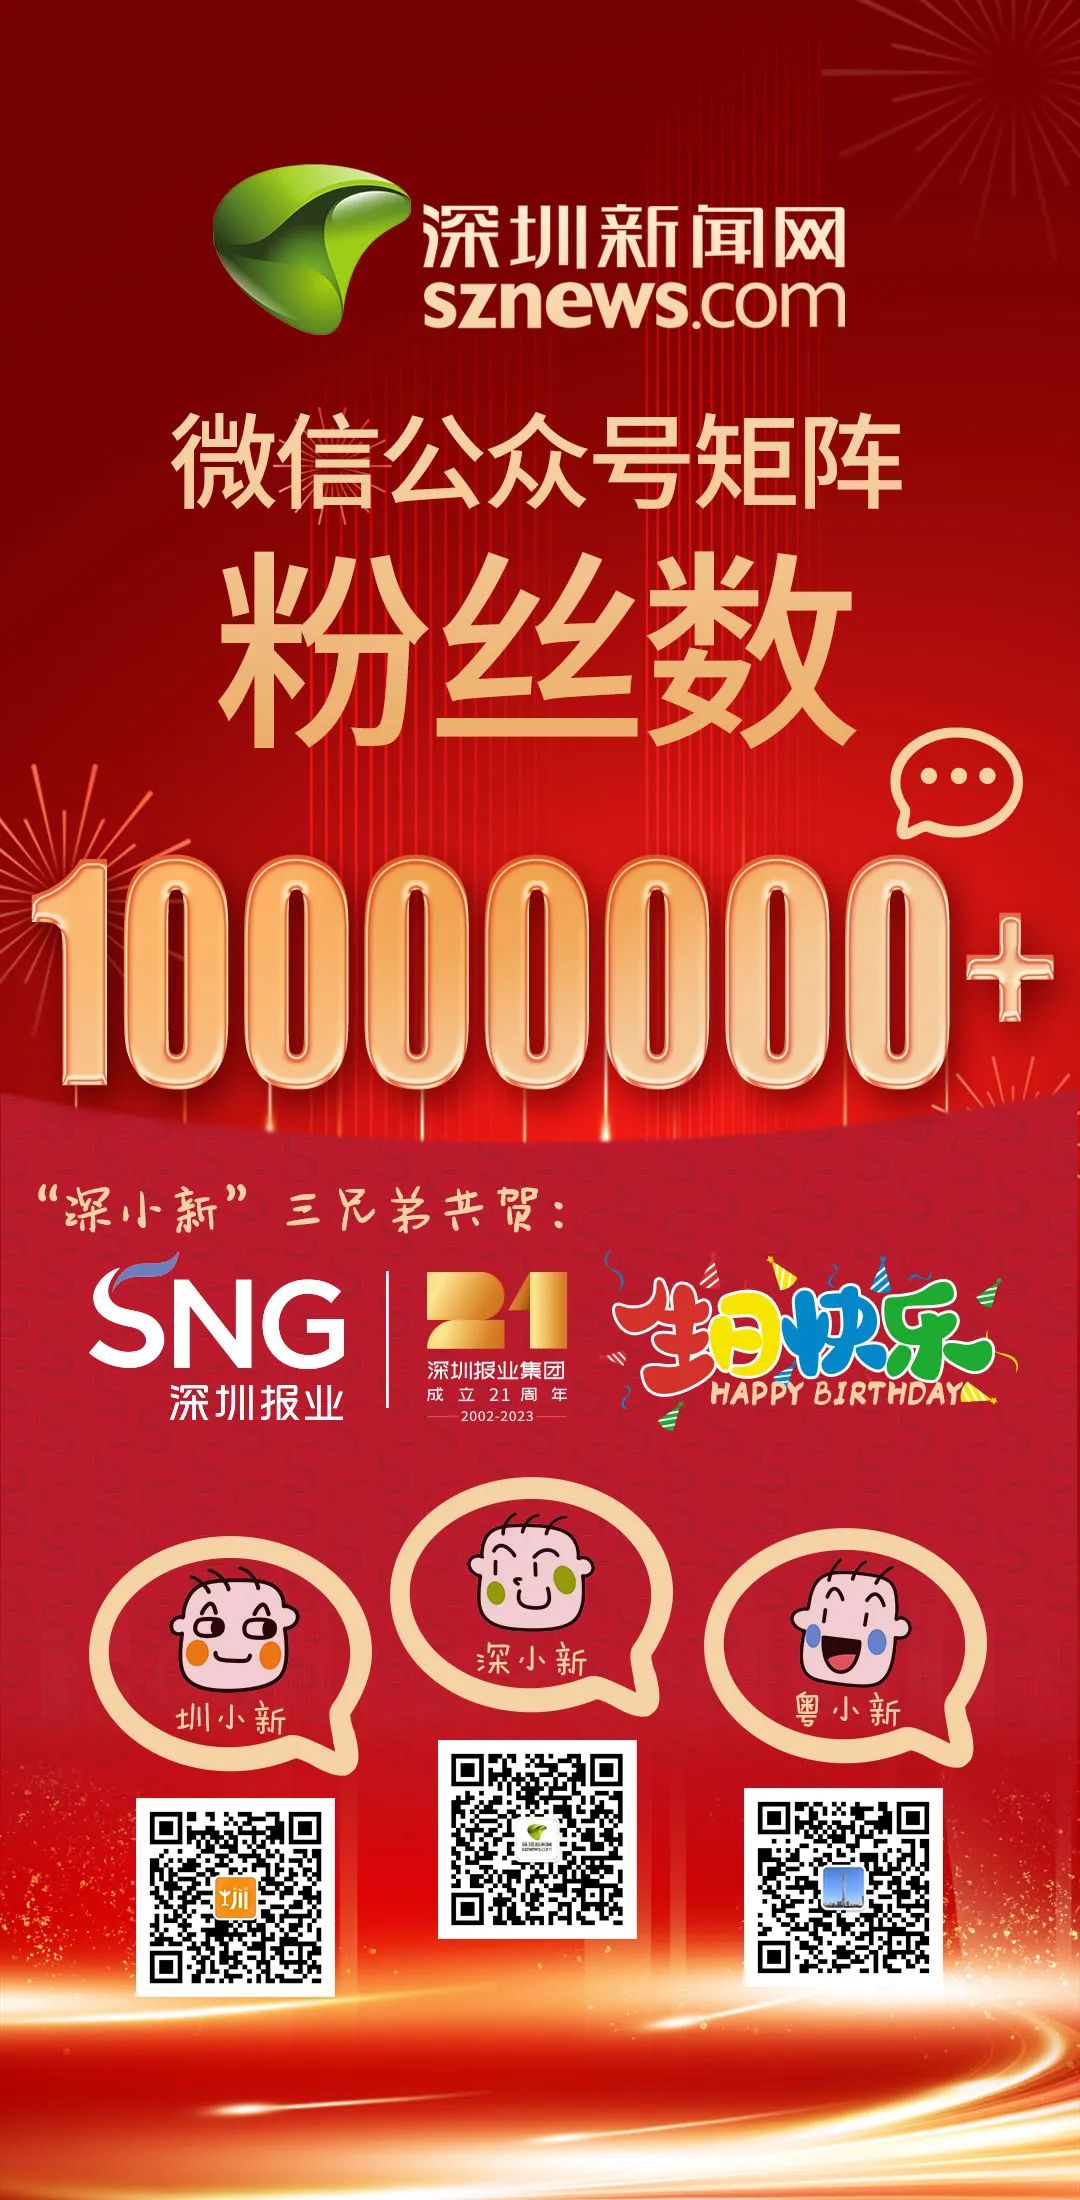 SNG21，深网微信粉丝数突破10000000！